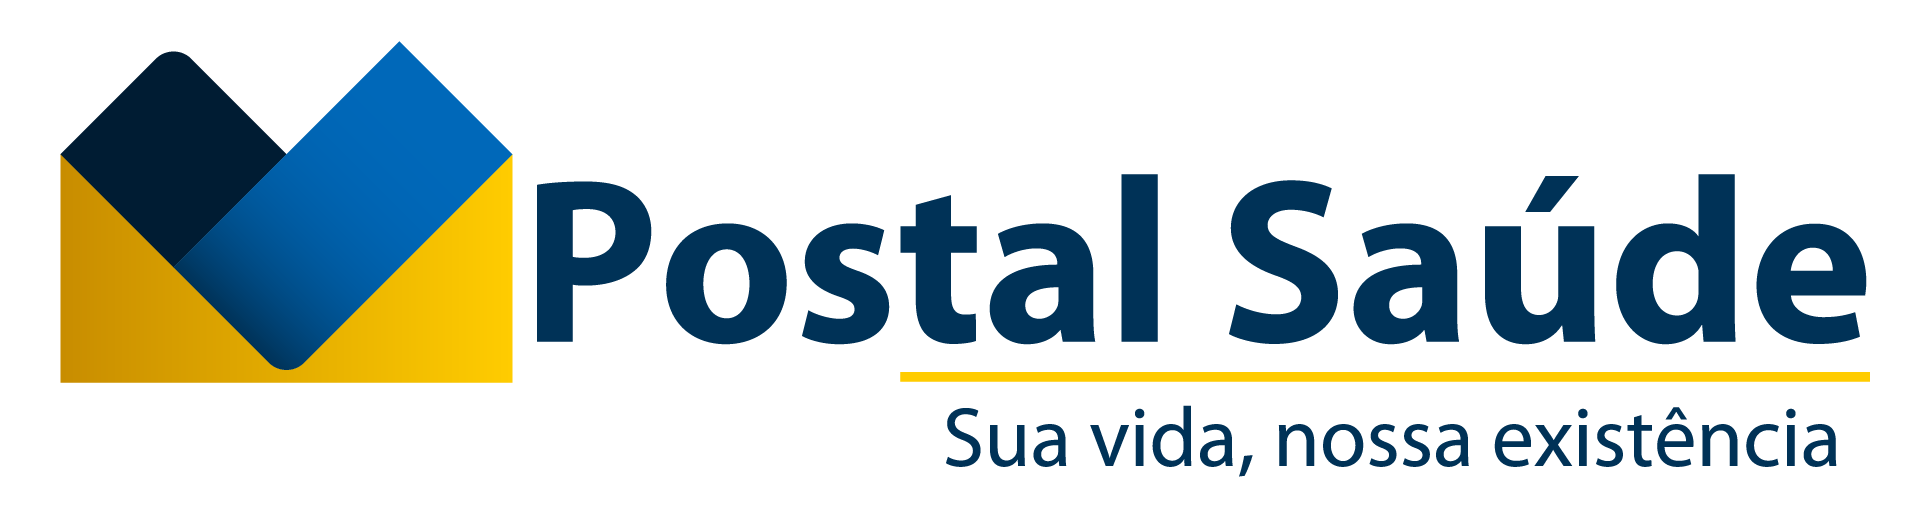 logo postal